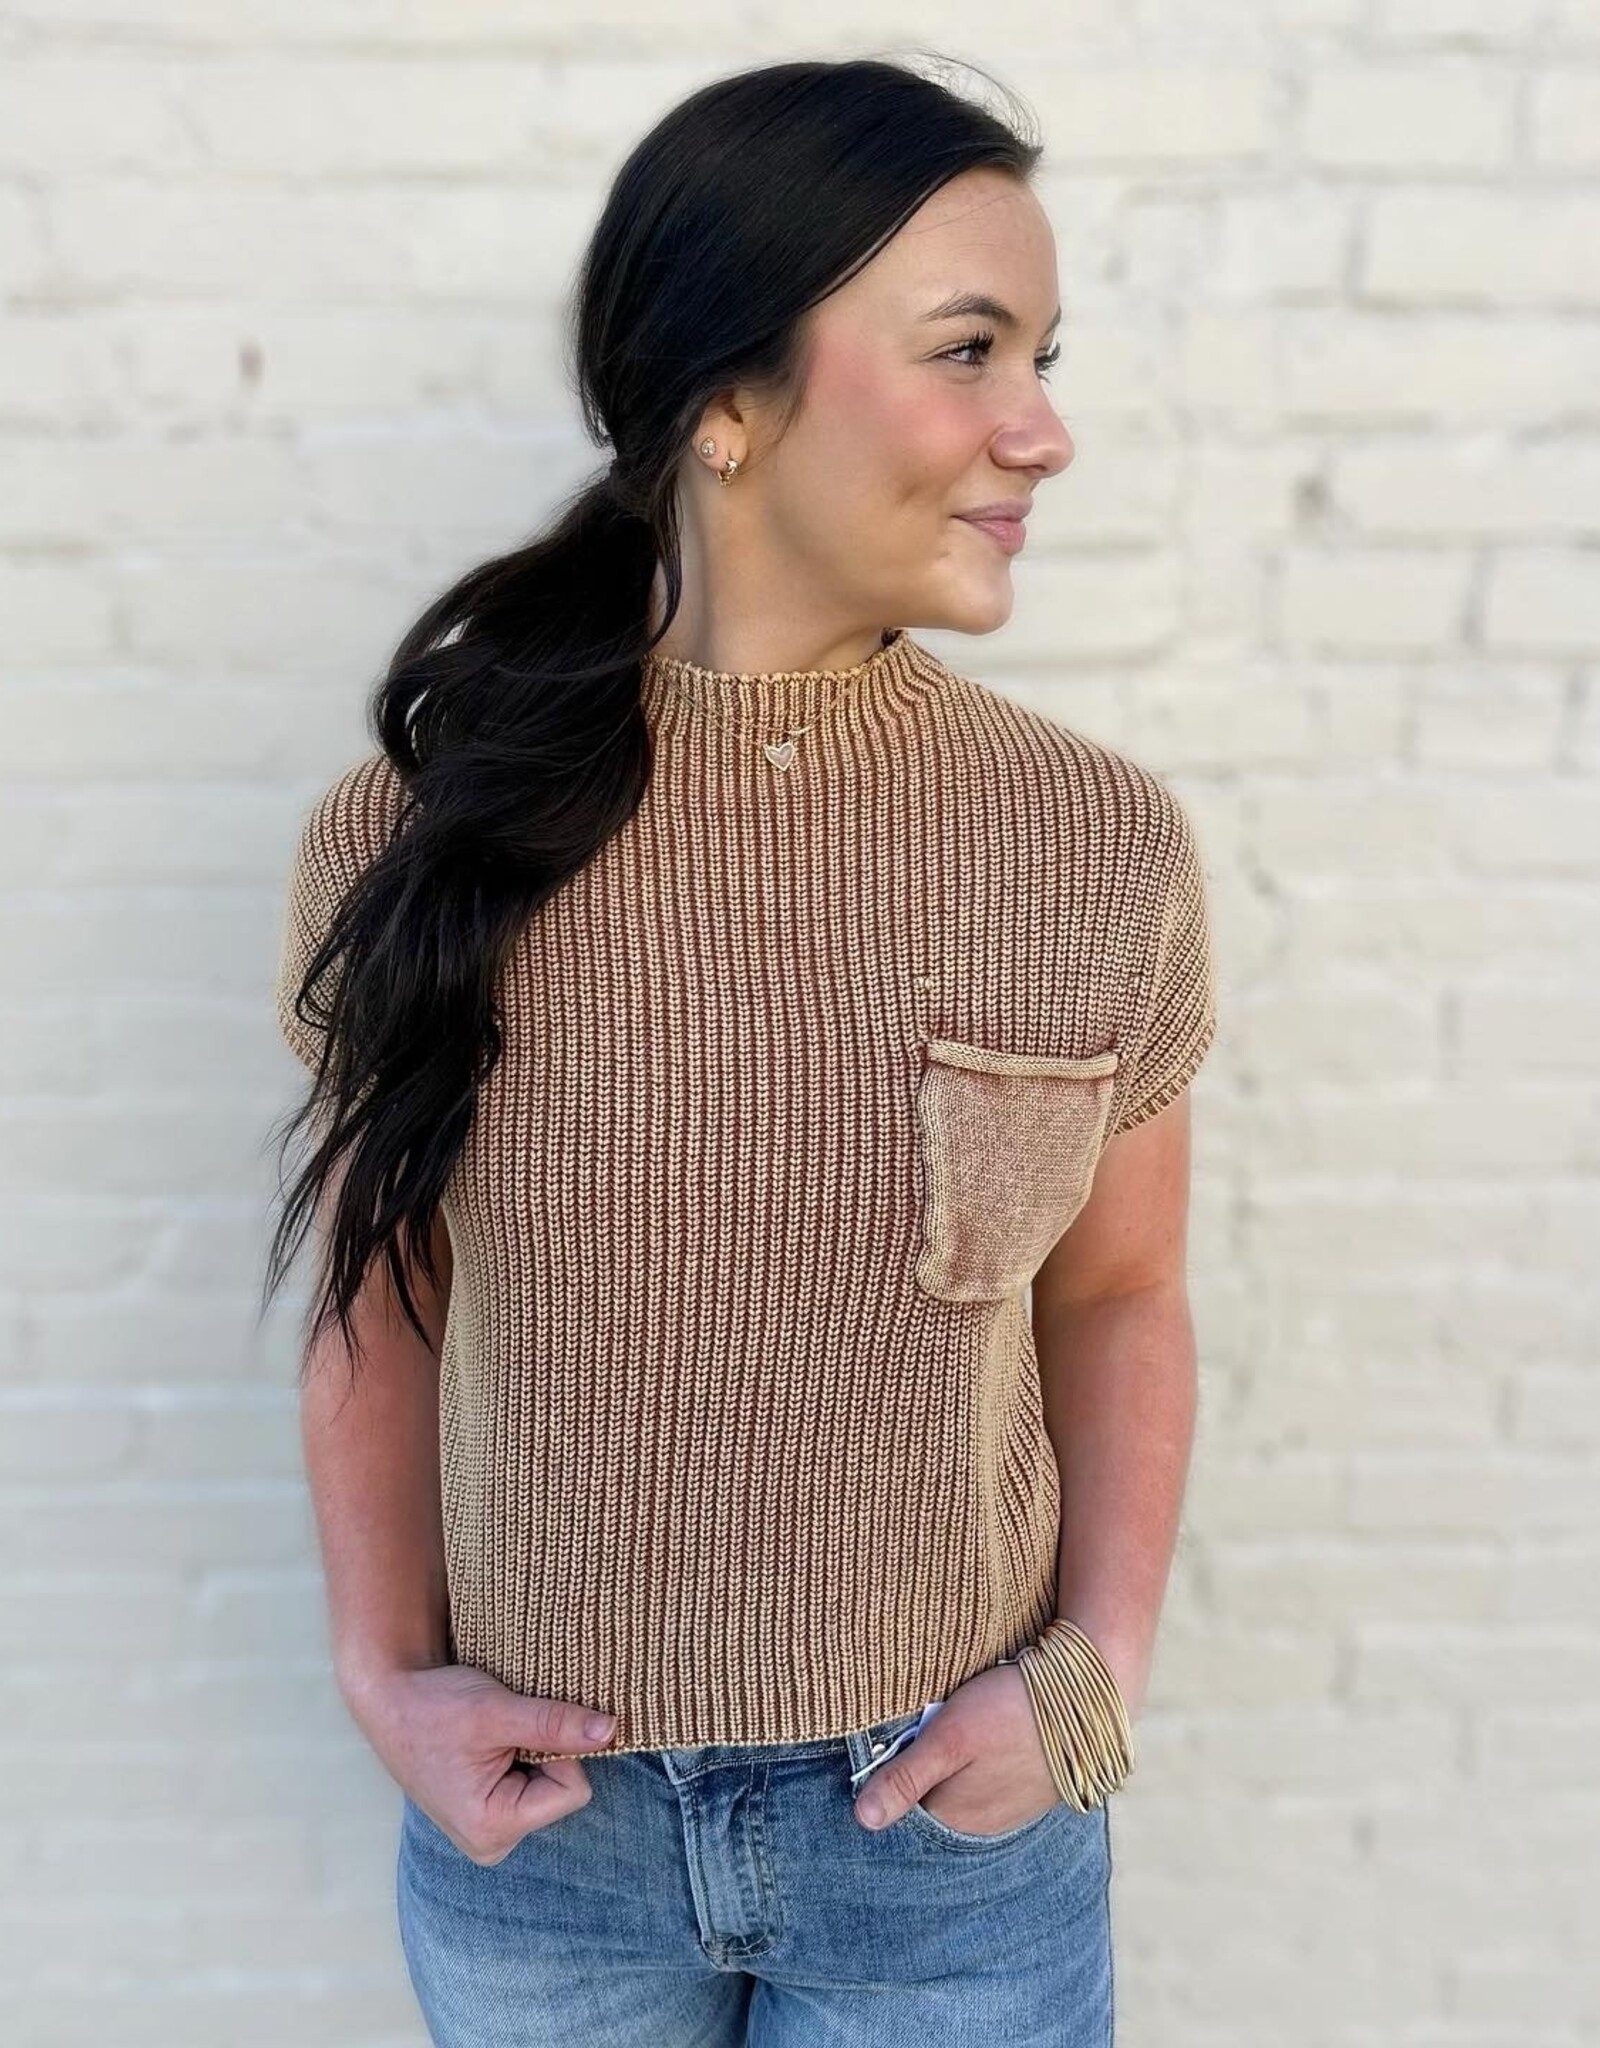 zenana Kristin Pocket Sweater Top in Tan - Marlee Janes